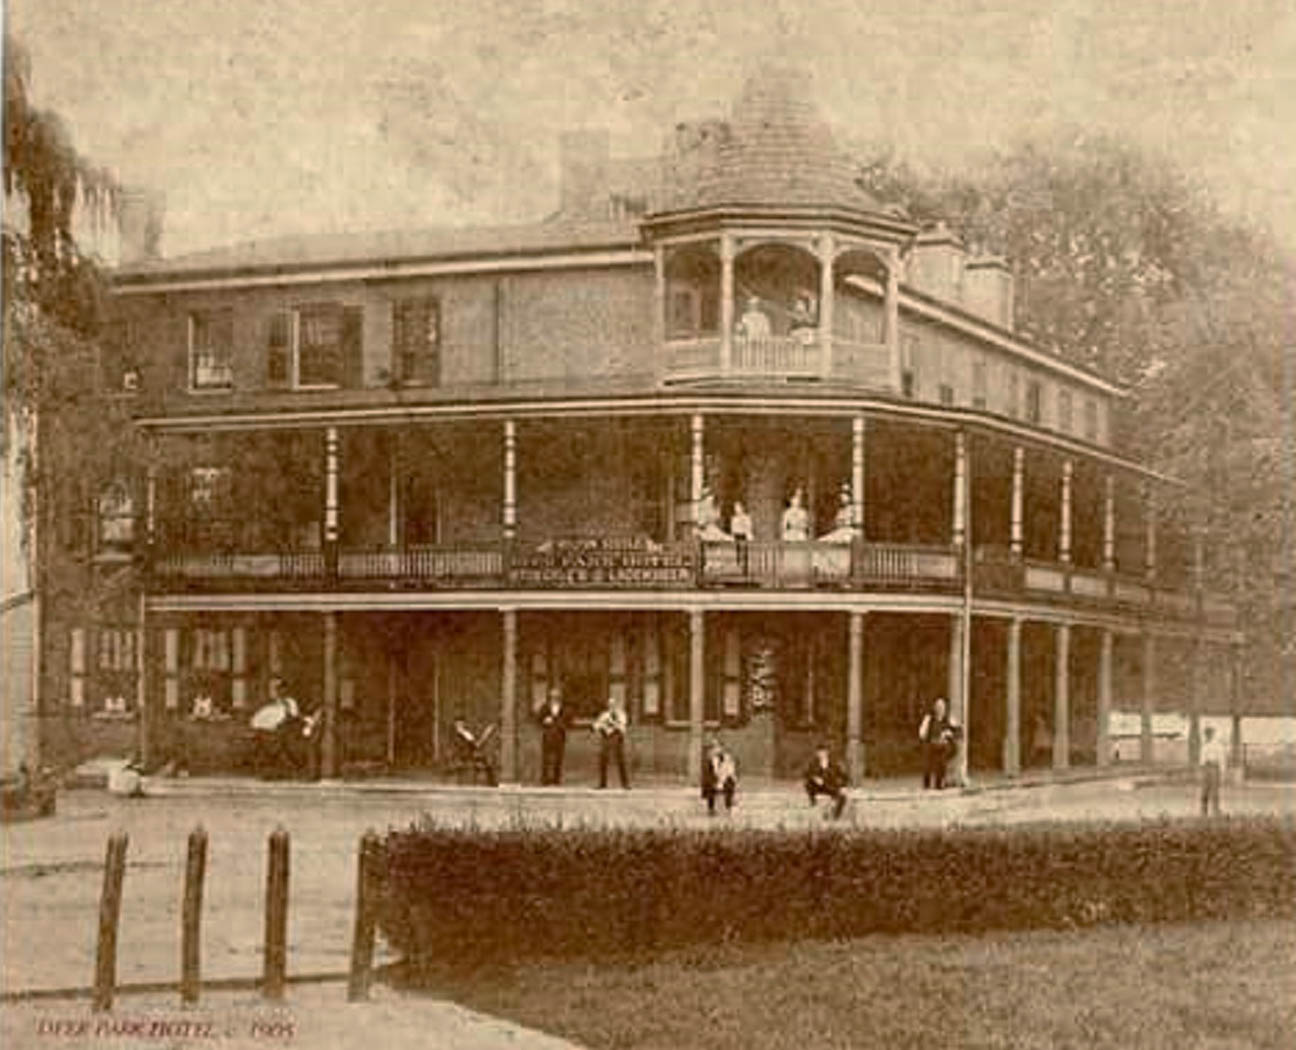 DEER PARK TAVERN AND HOTEL on Main Street in Newark DE CIRCA 1905